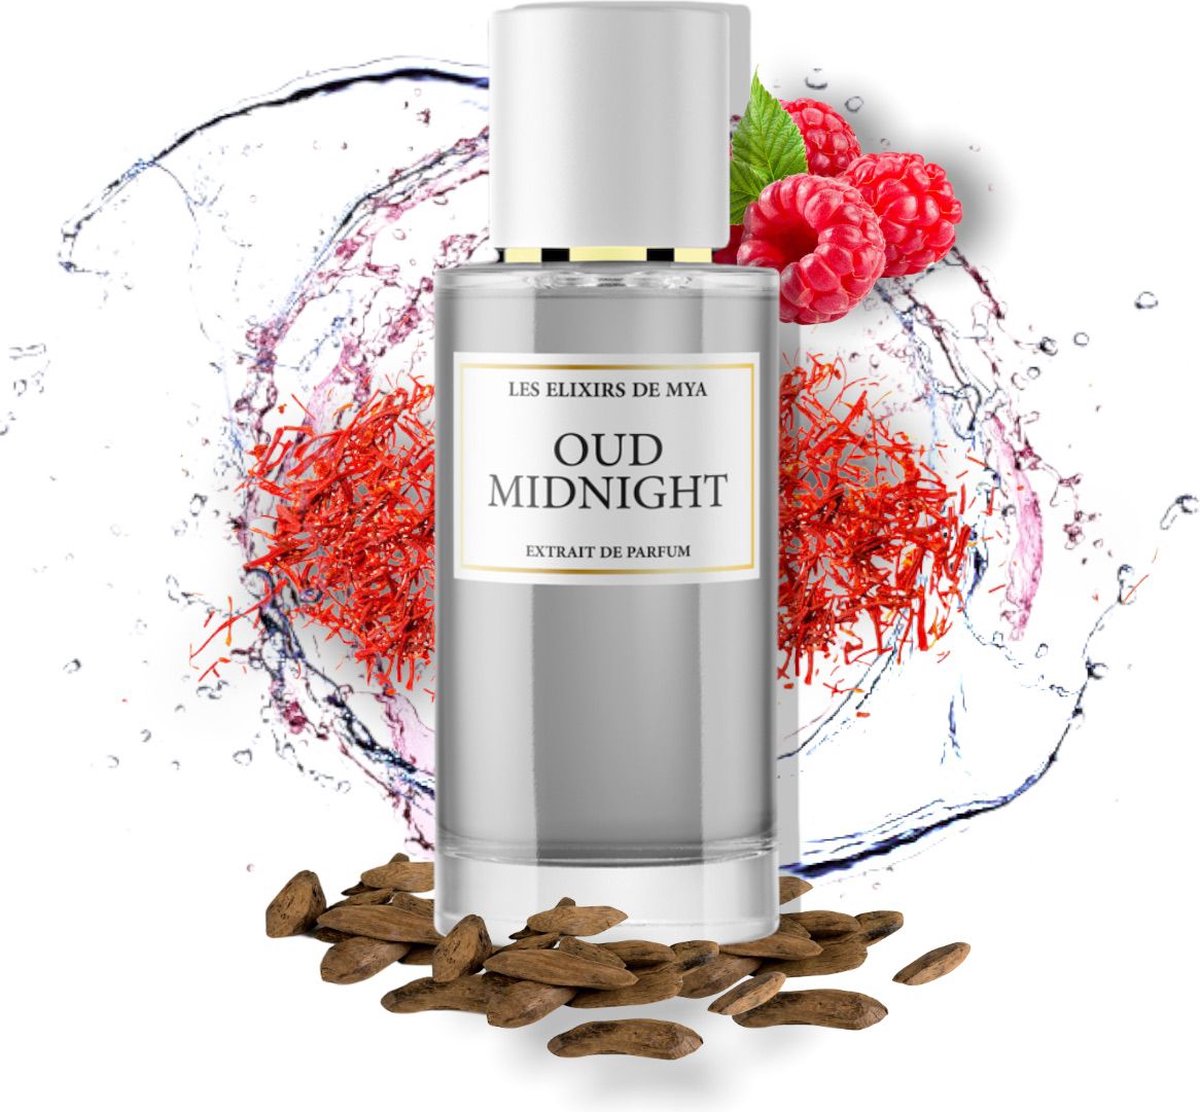 OUD MIDNIGHT - MYA - Unisex Parfum - Extrait de Parfum